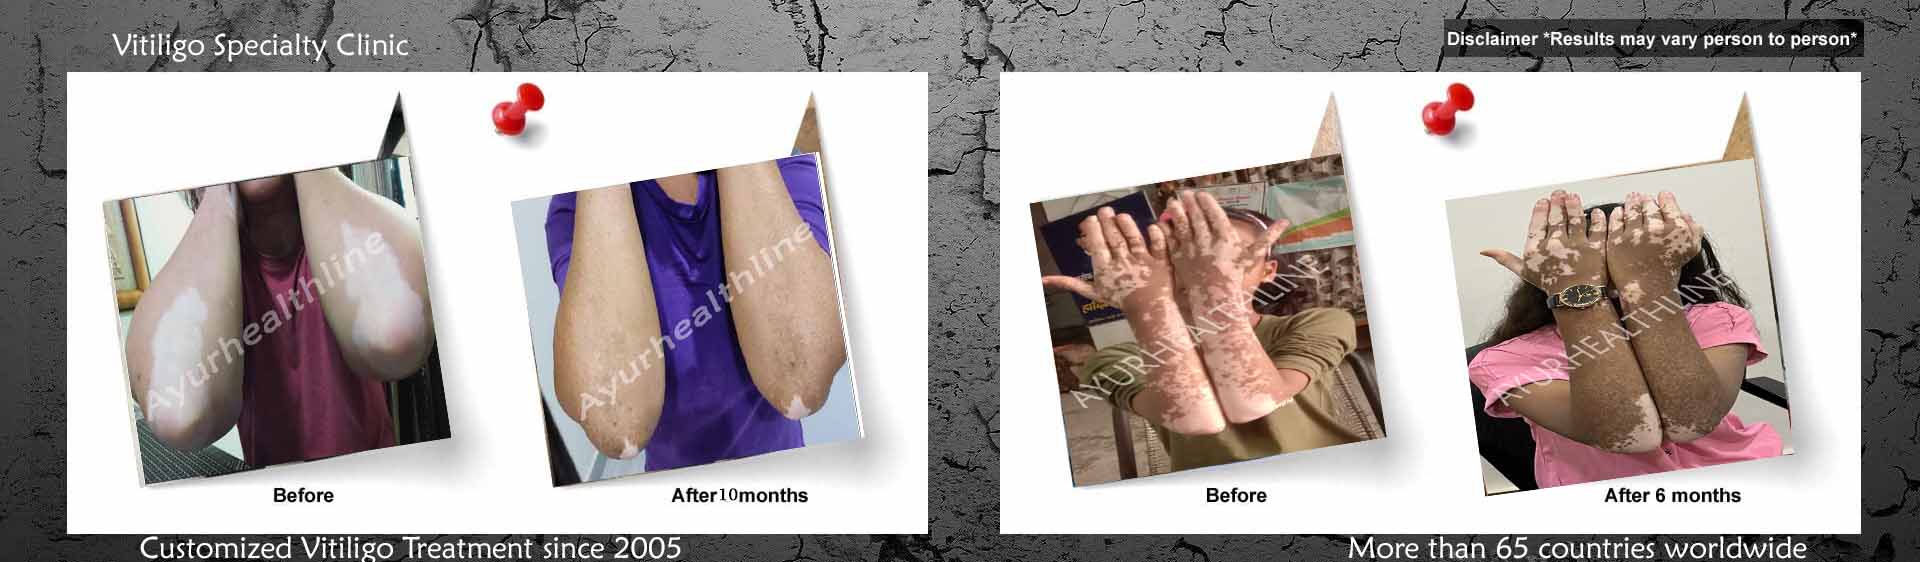 vitilig_treatment_USA